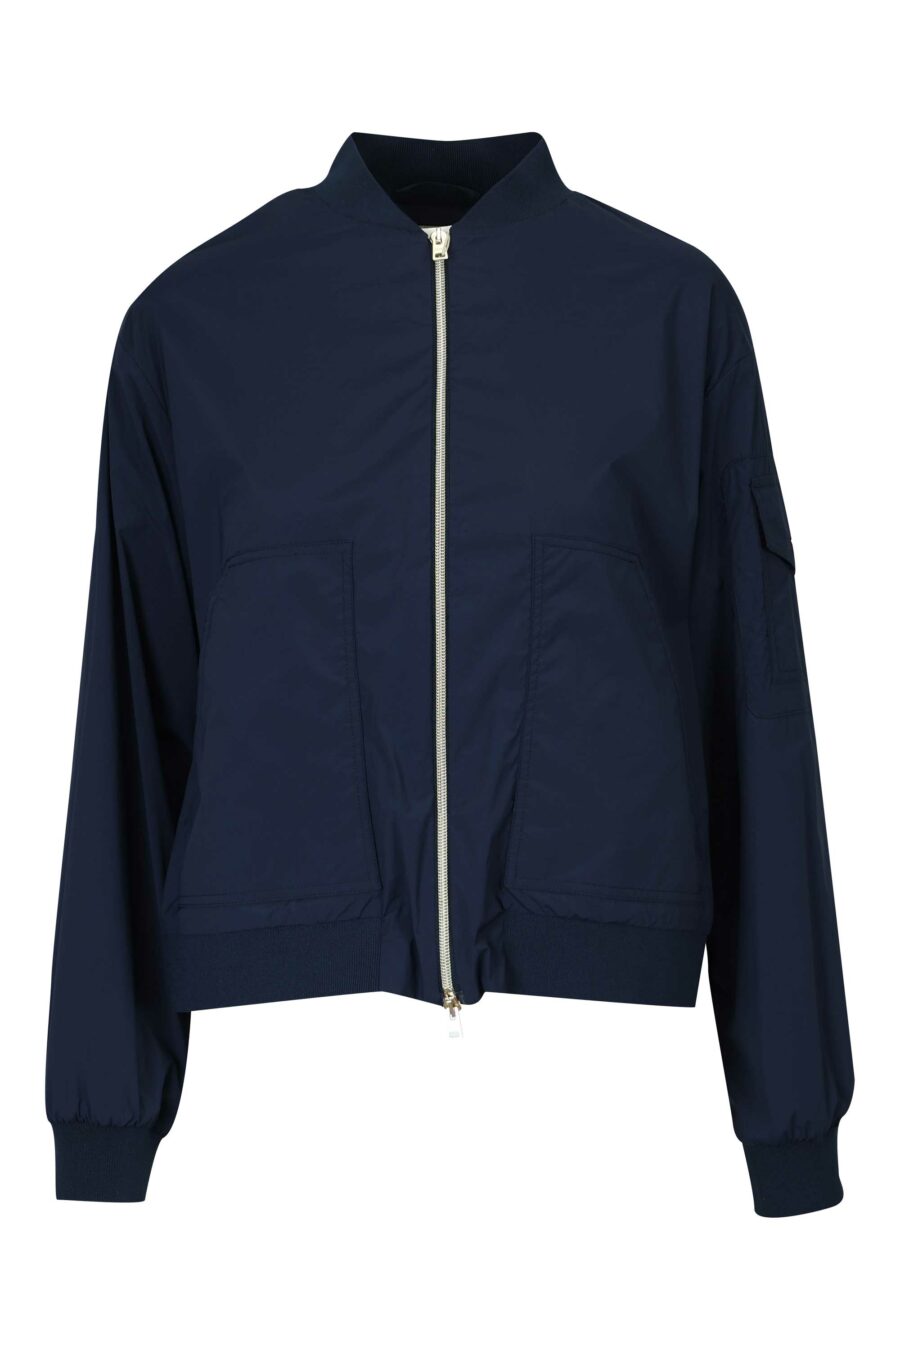 Blue woven jacket with mini-logo - 8055721982335